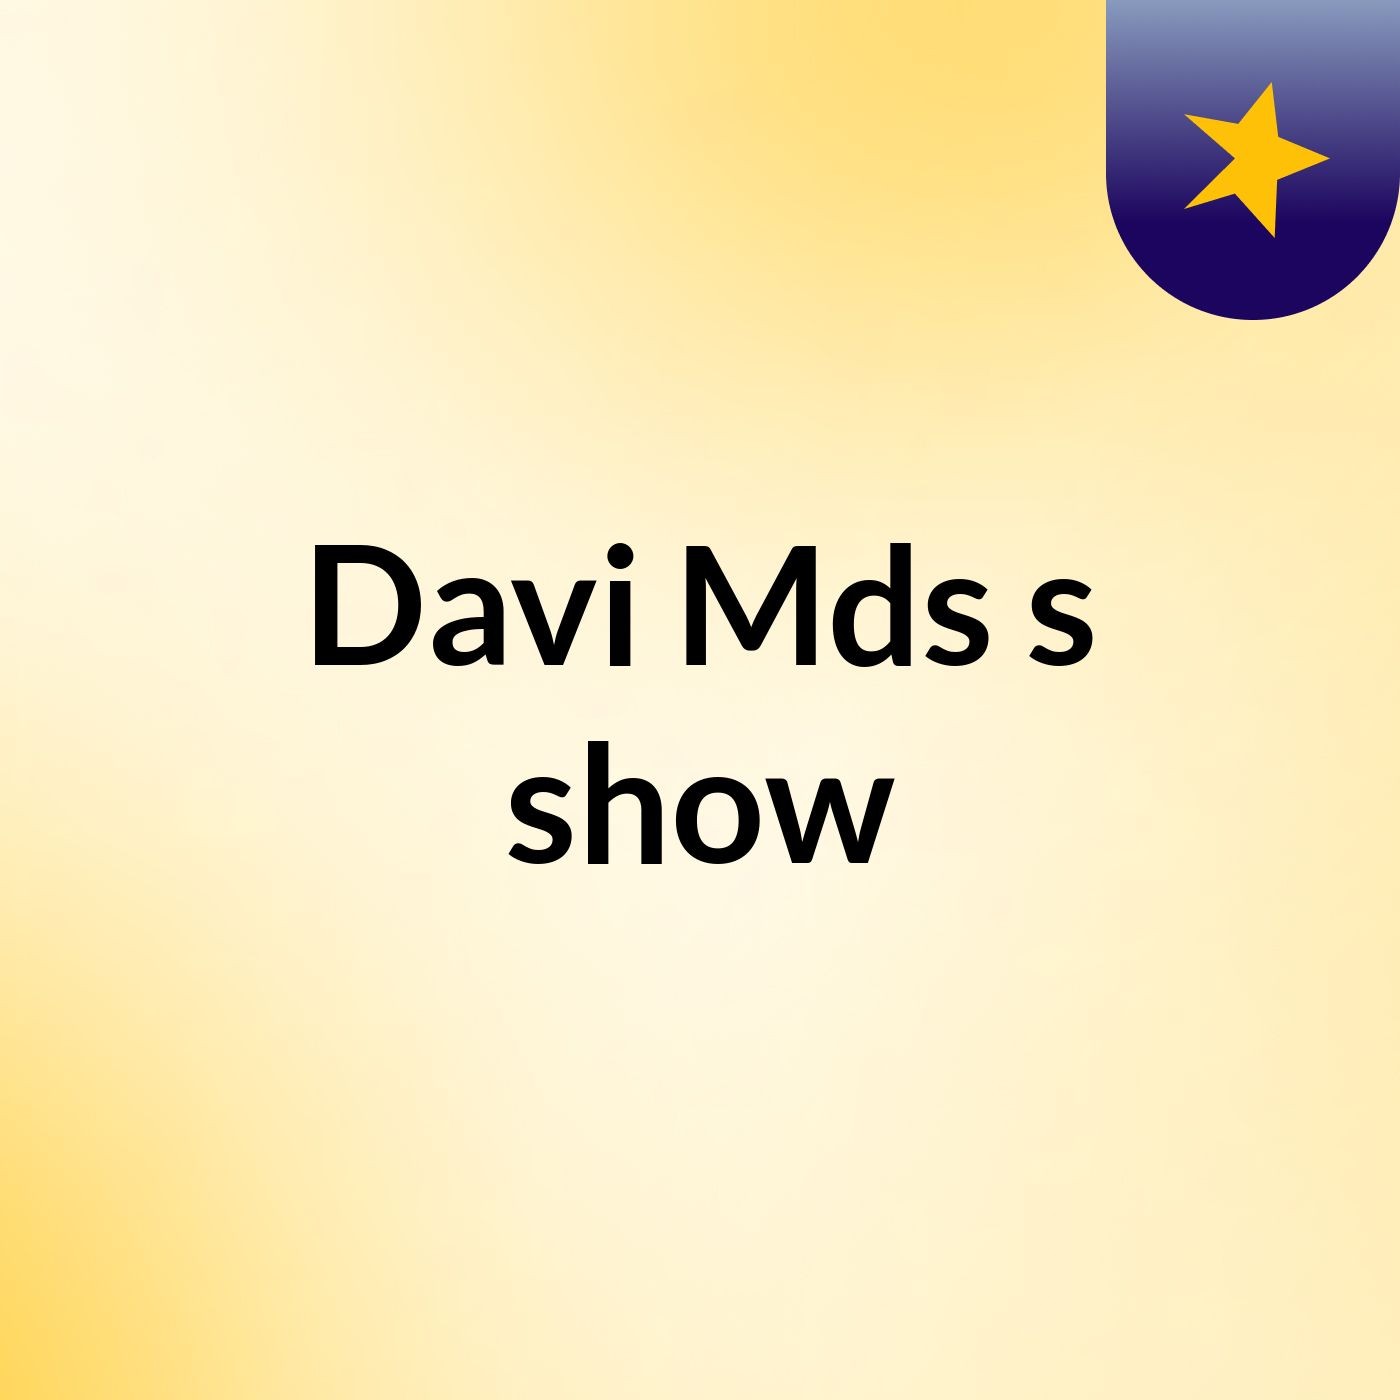 Davi Mds's show